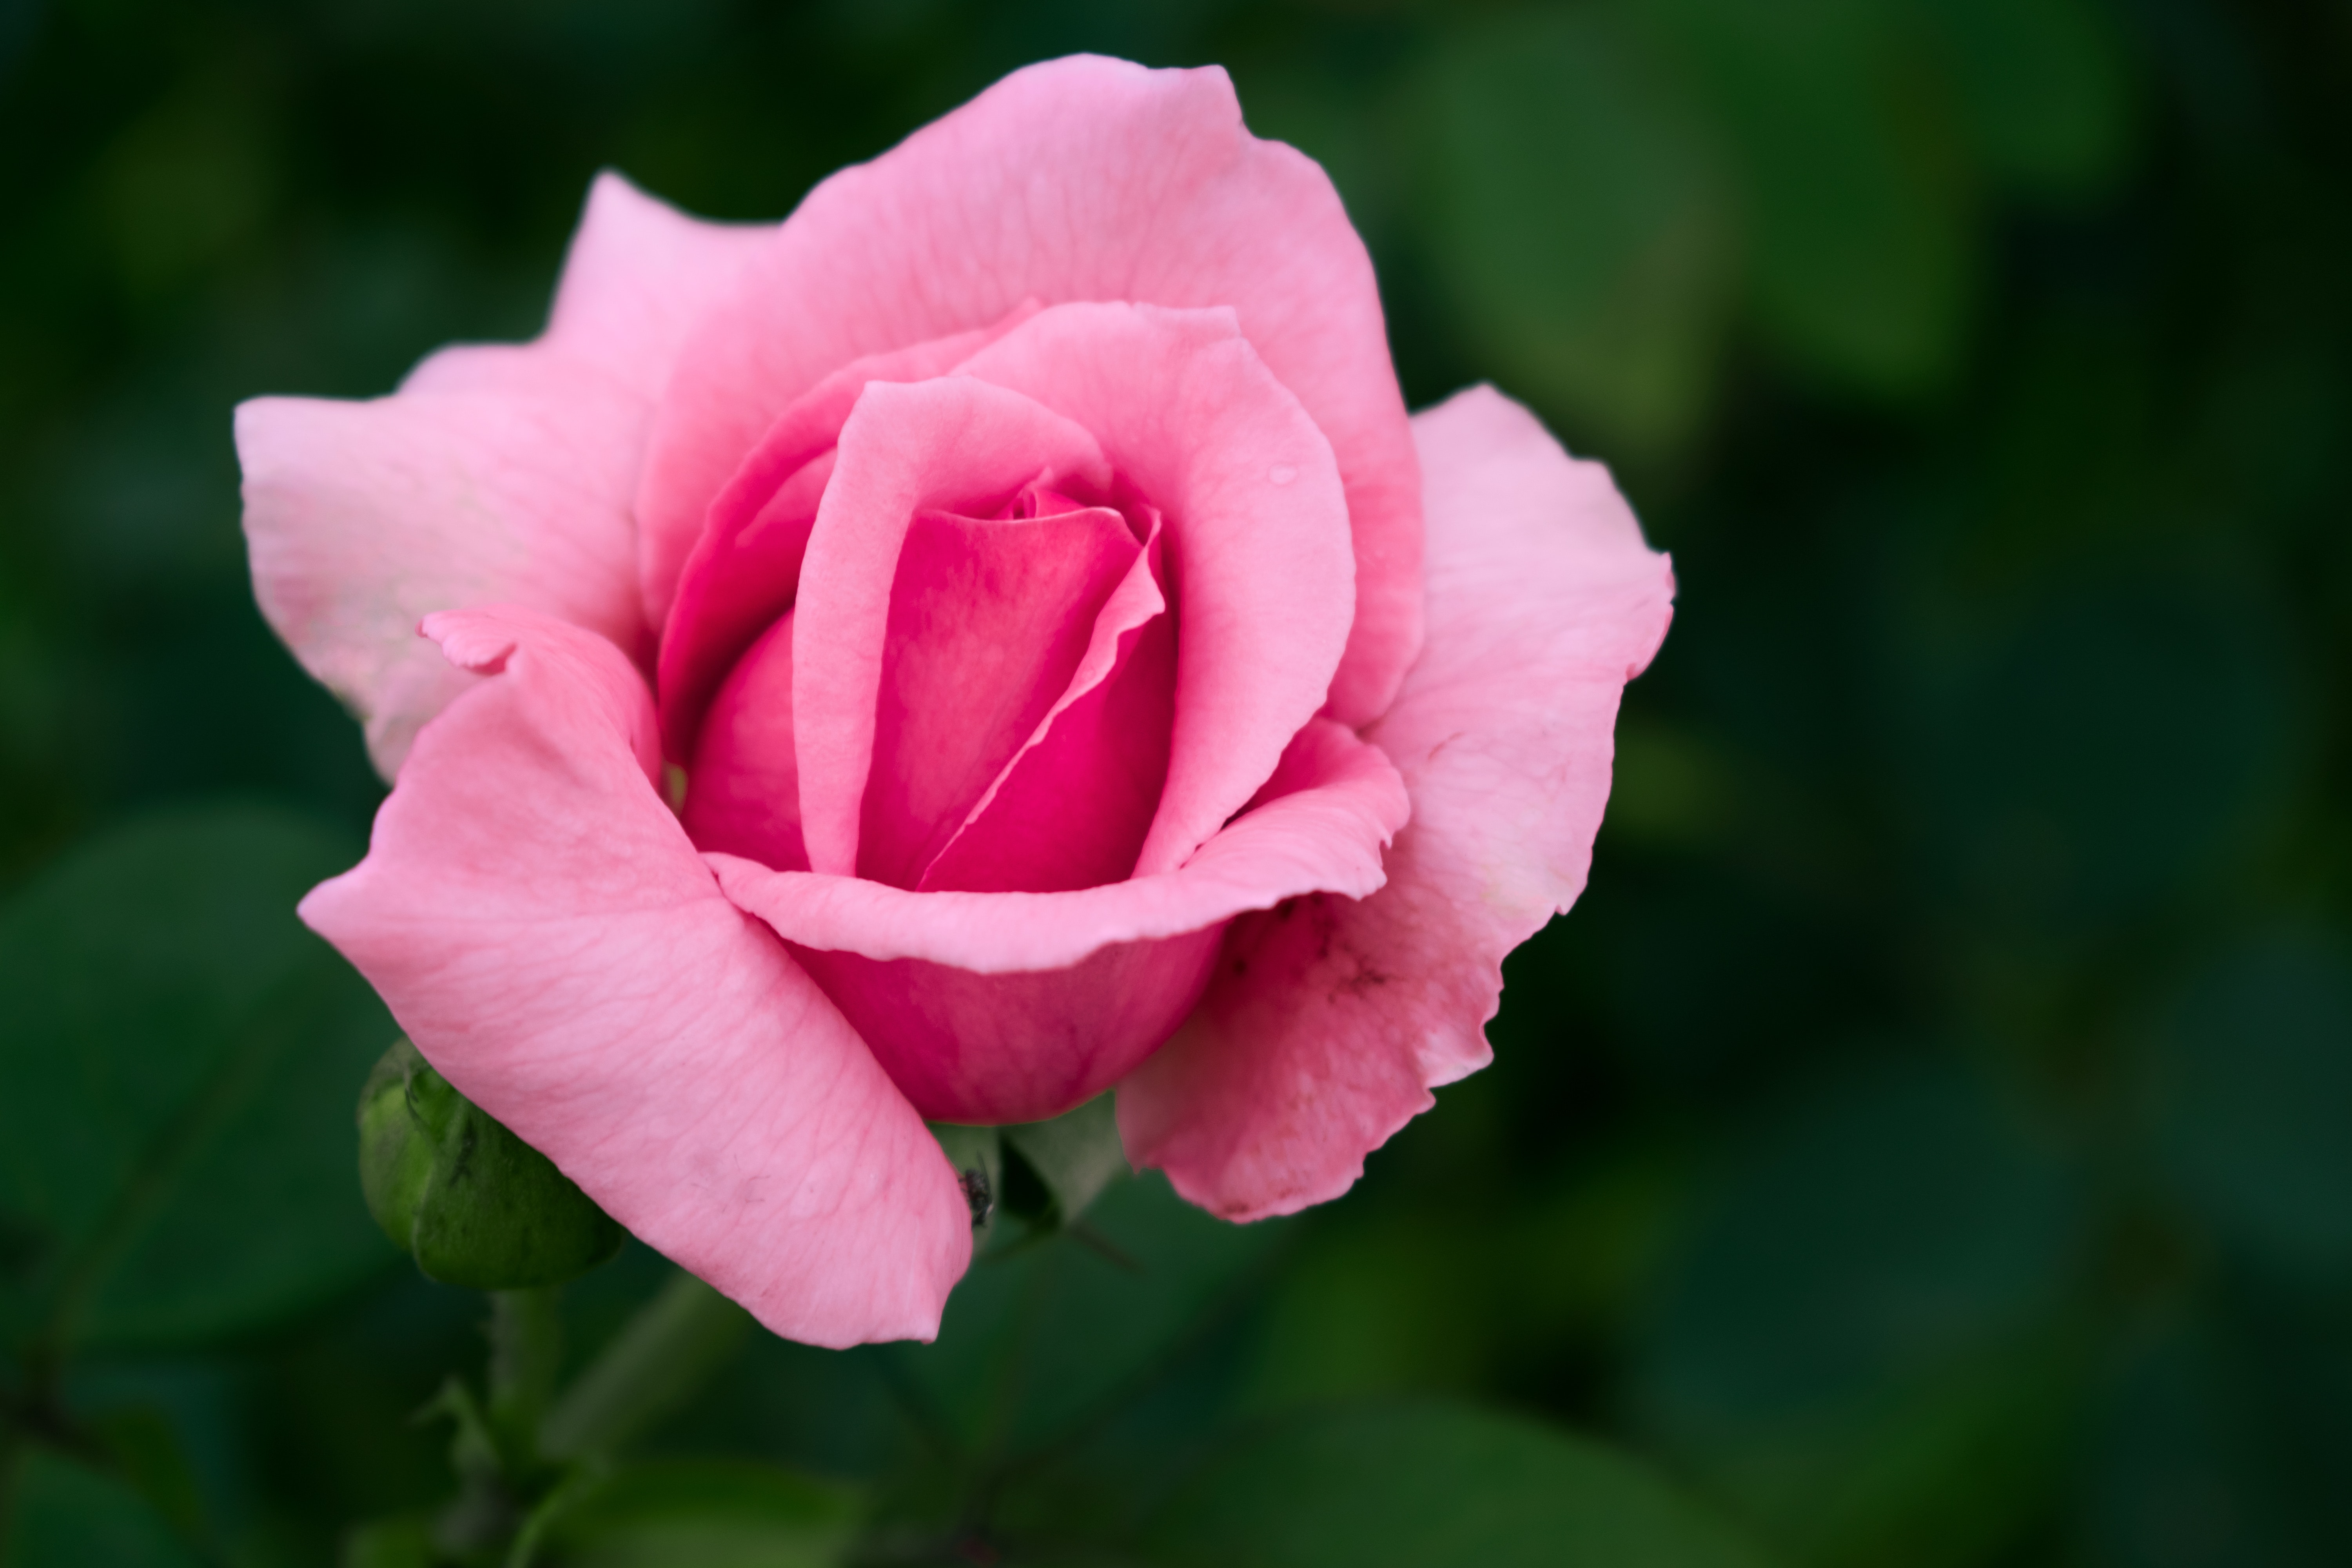 1000+ Interesting Pink Rose Photos · Pexels · Free Stock Photos